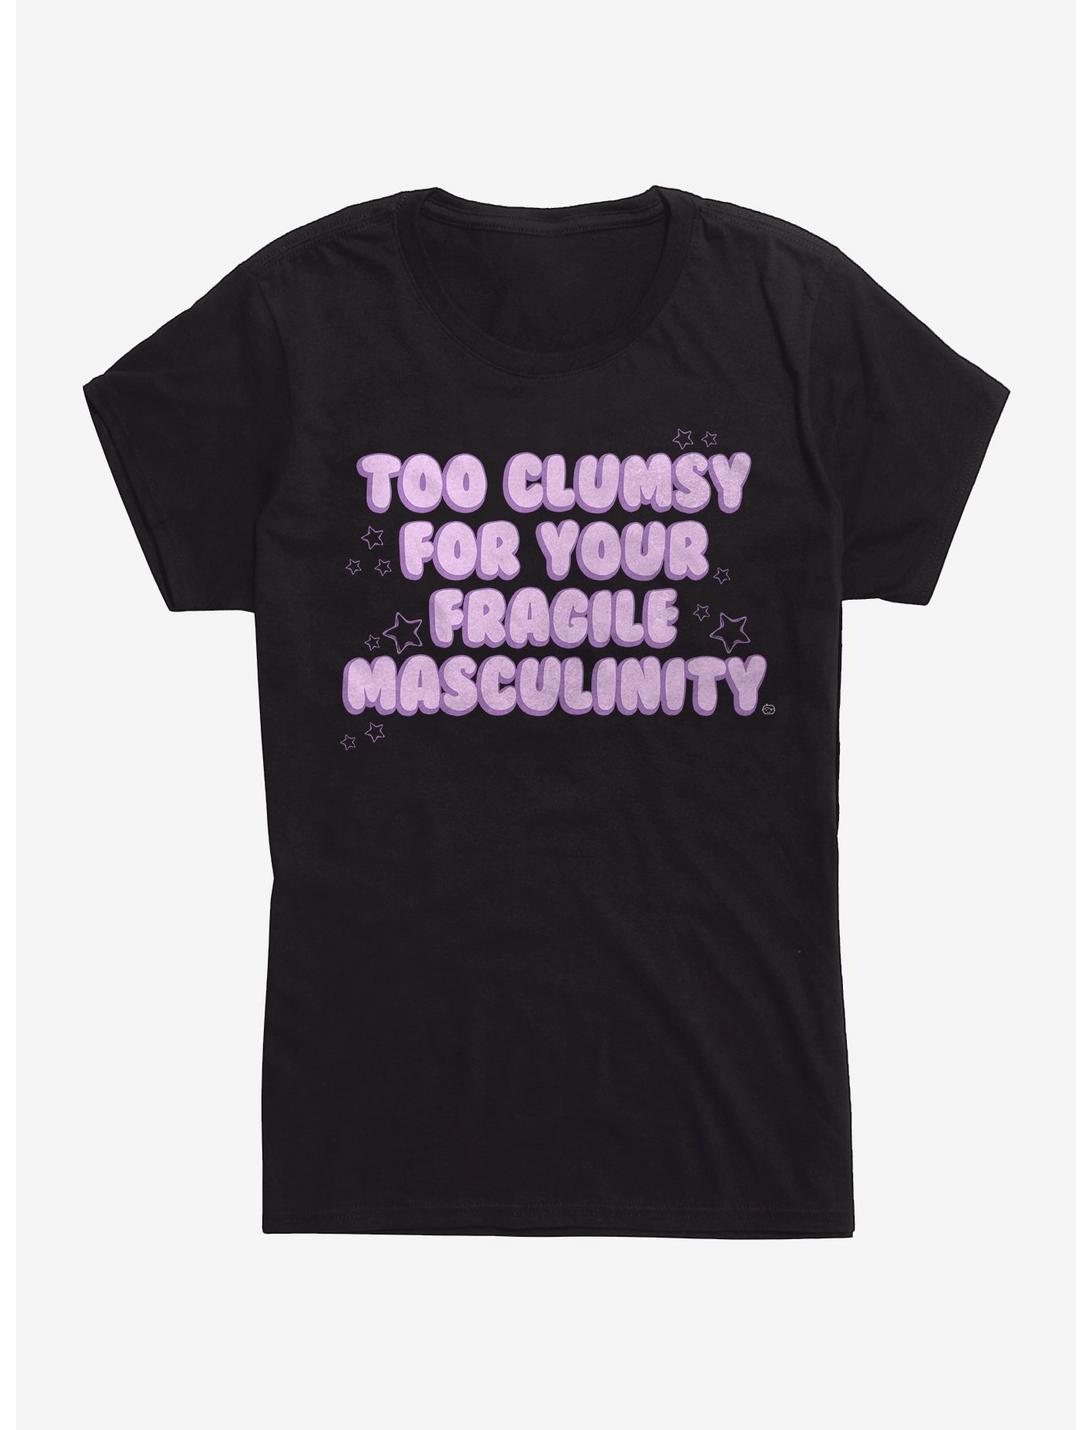 Fragile Masculinity Womens T-Shirt, BLACK, hi-res